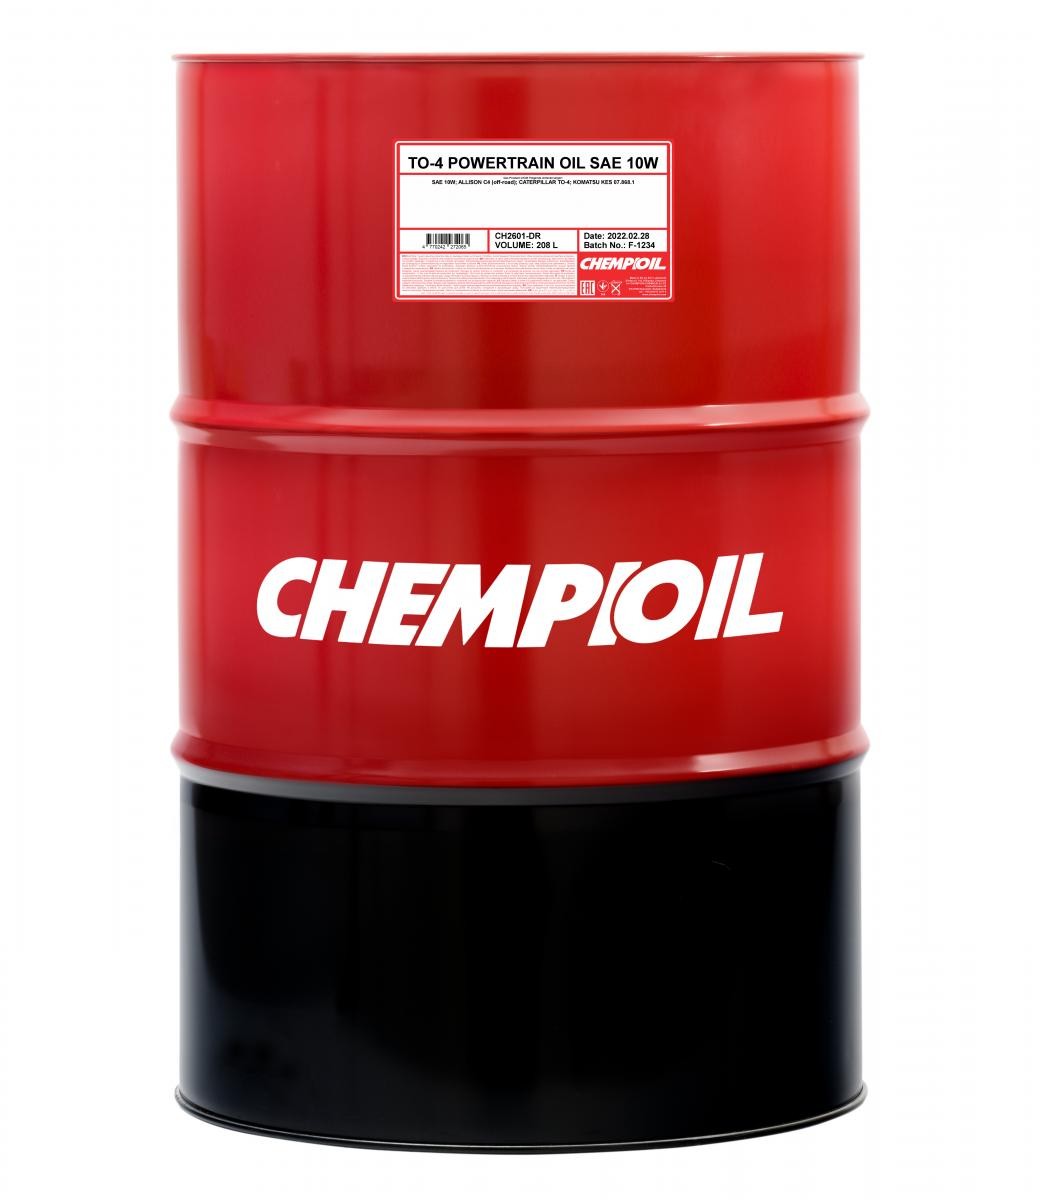 CHEMPIOIL POWERTRAIN OIL, TO-4 SAE 10, 208l Motor oil CH2601-DR buy